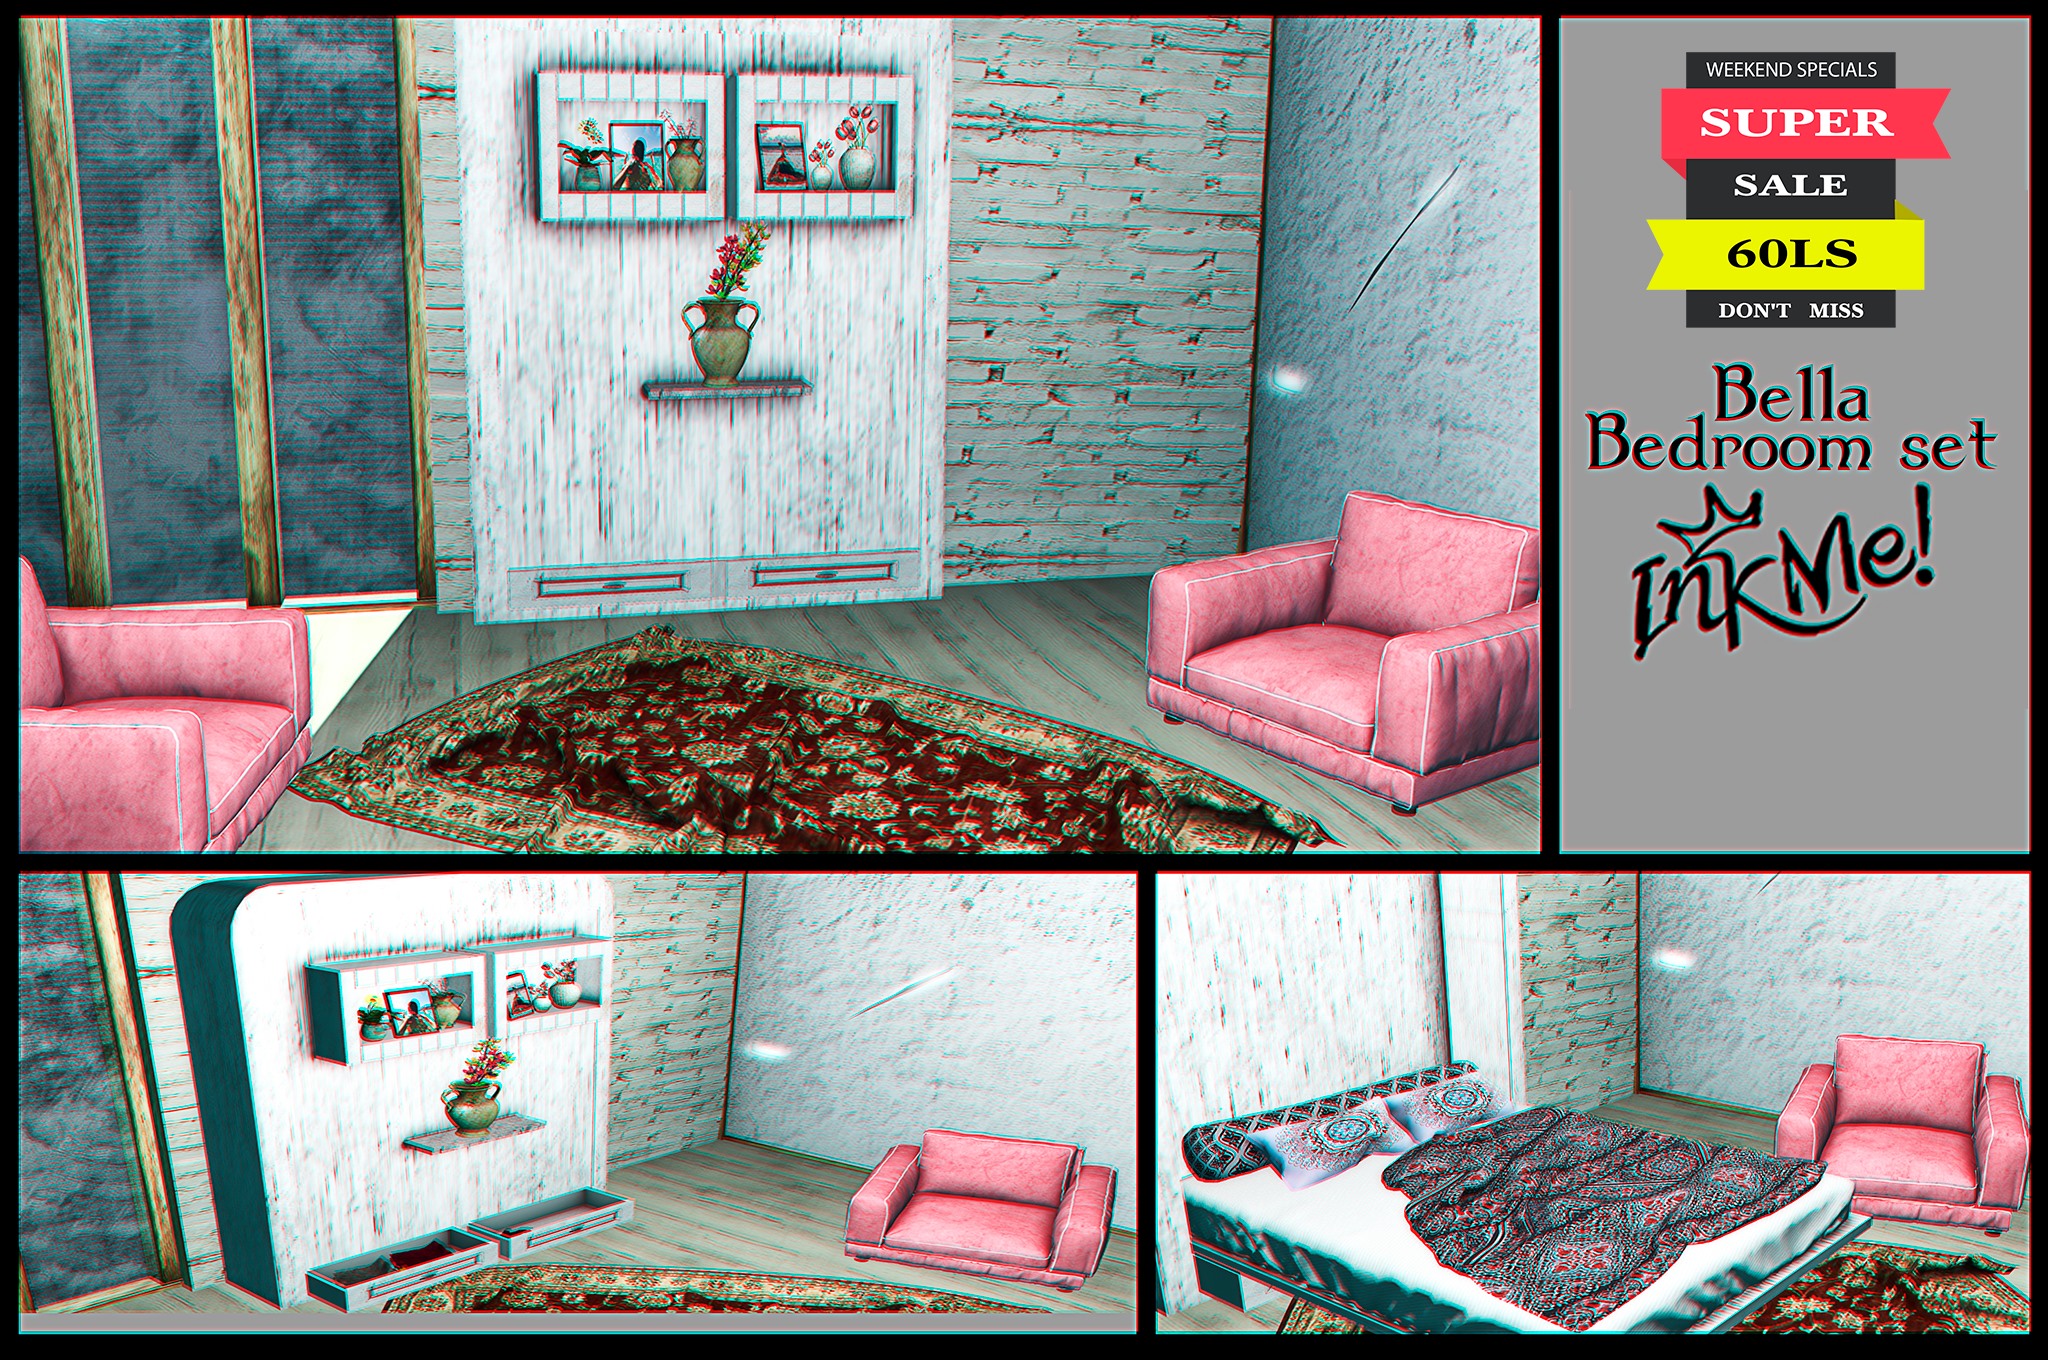 InkMe – Bella Bedroom Set